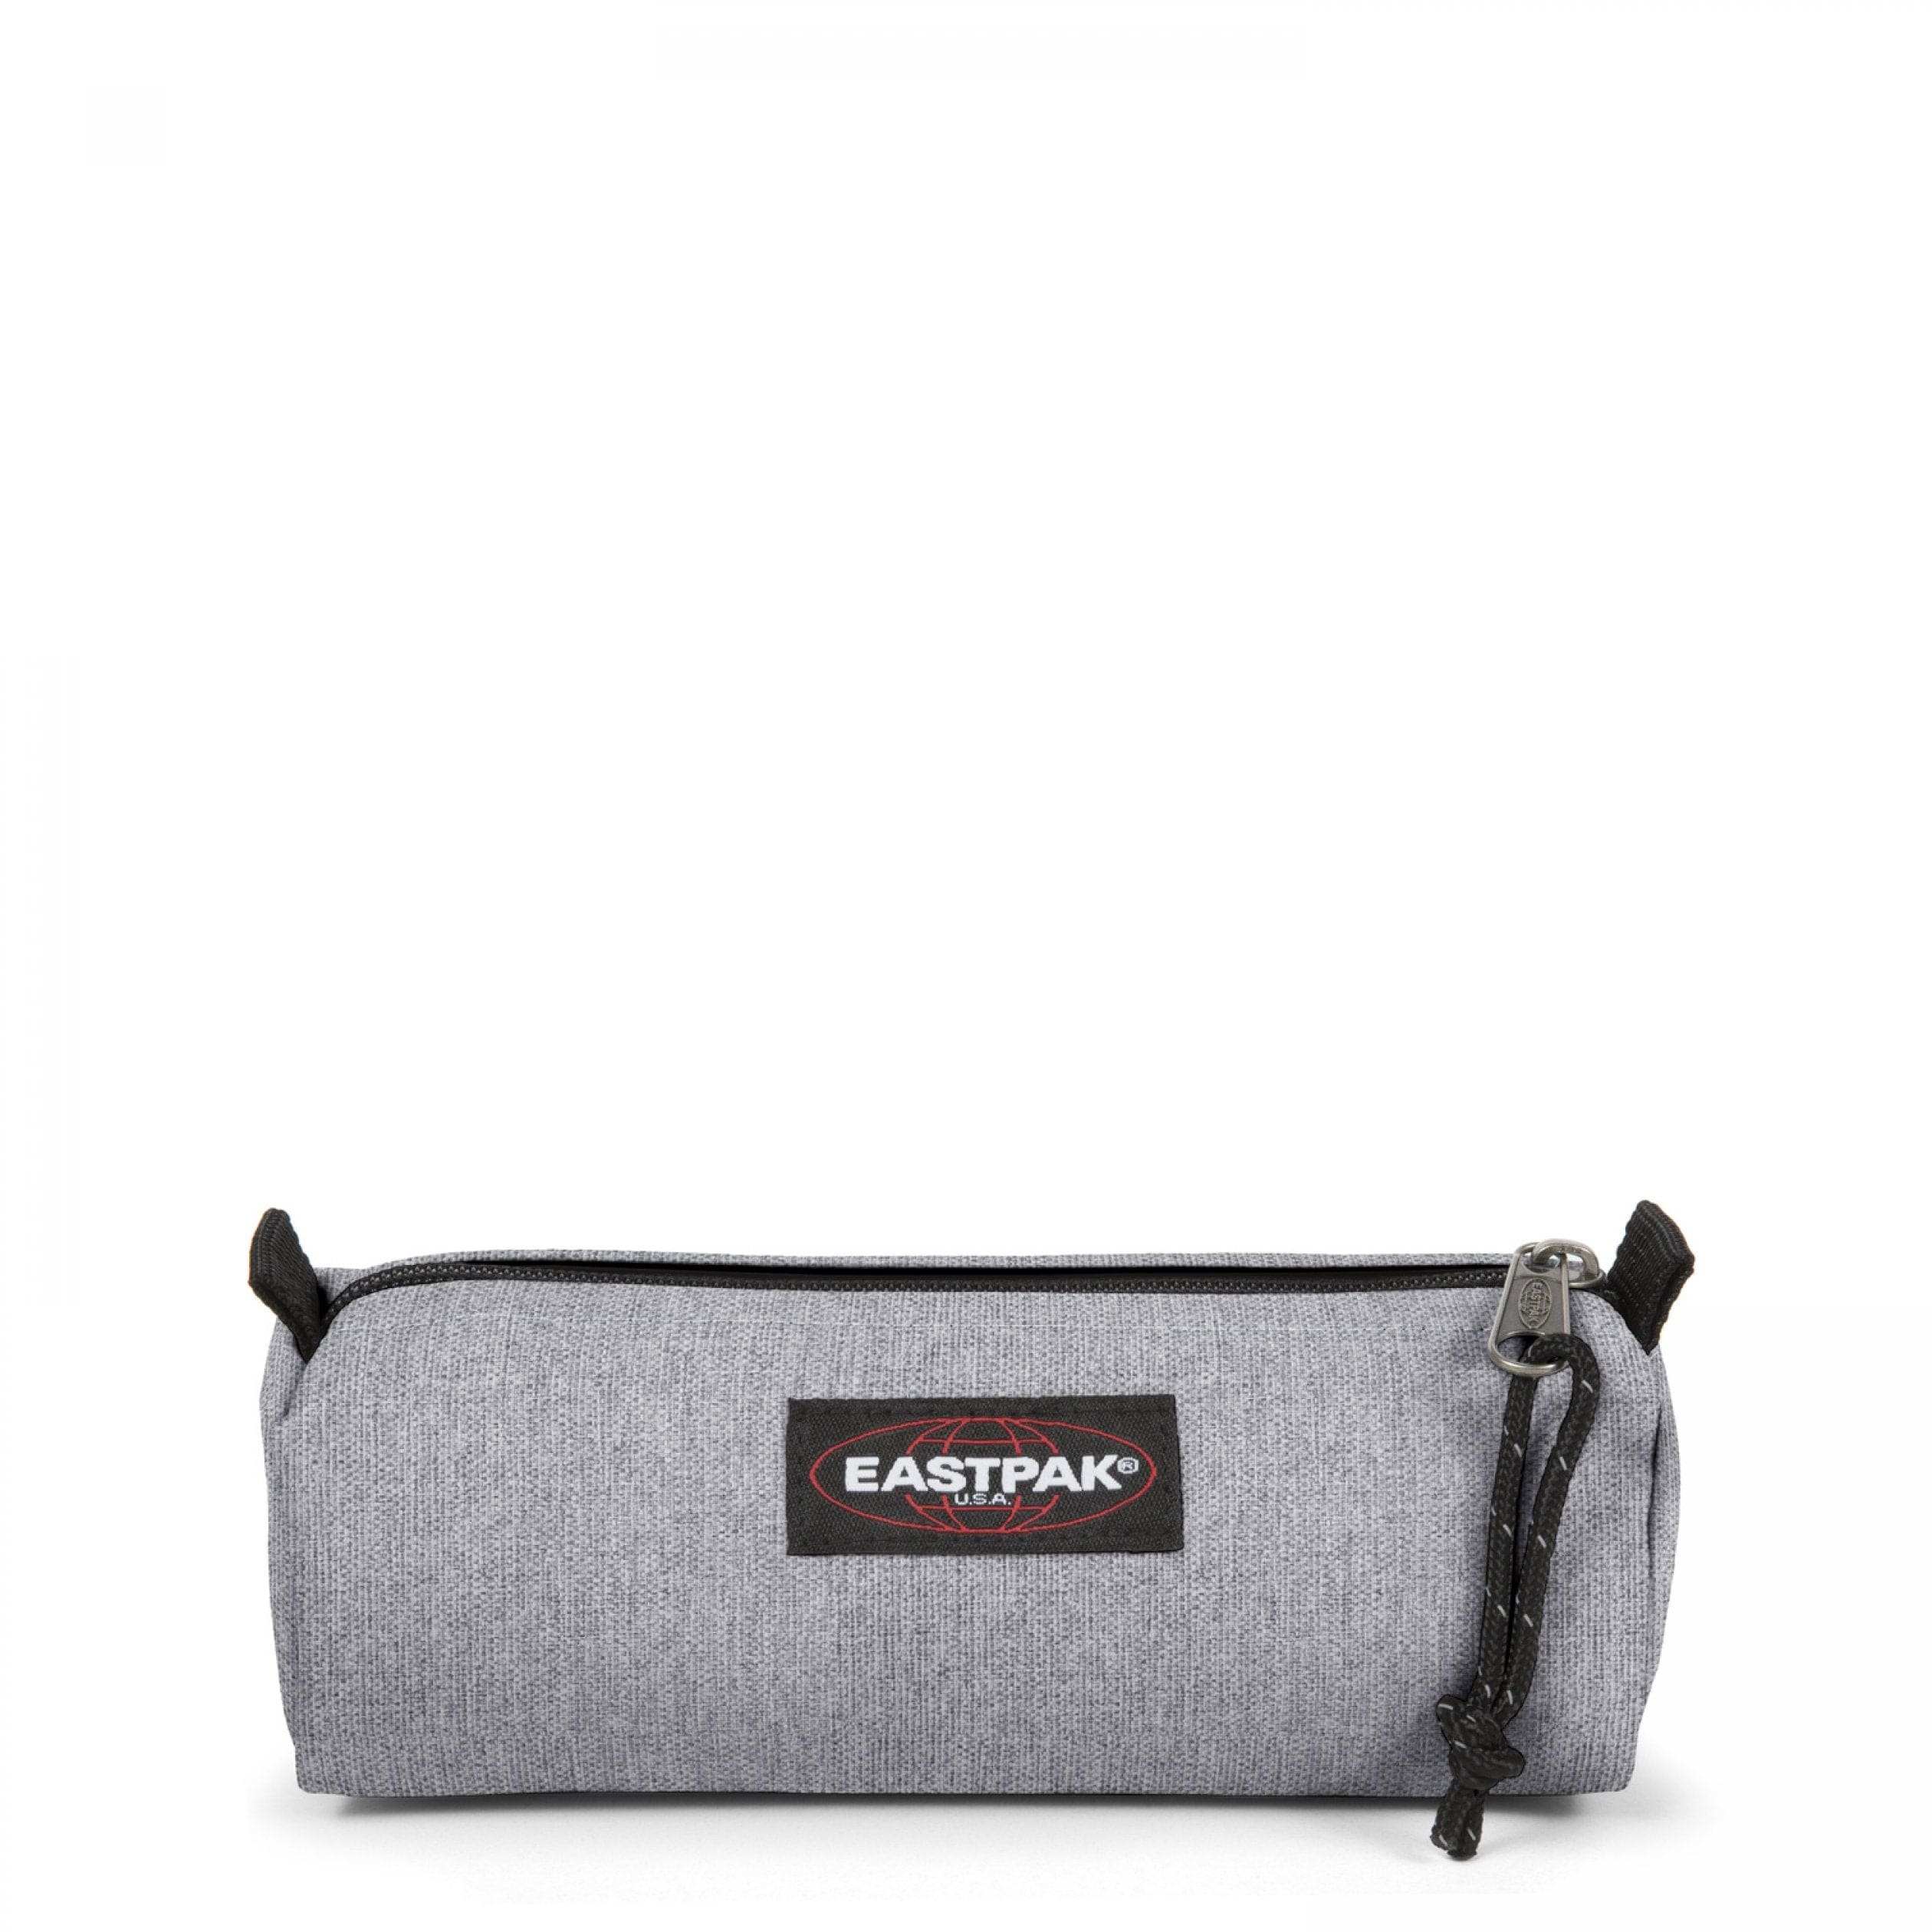 Eastpak Benchmark Single Case - Grey